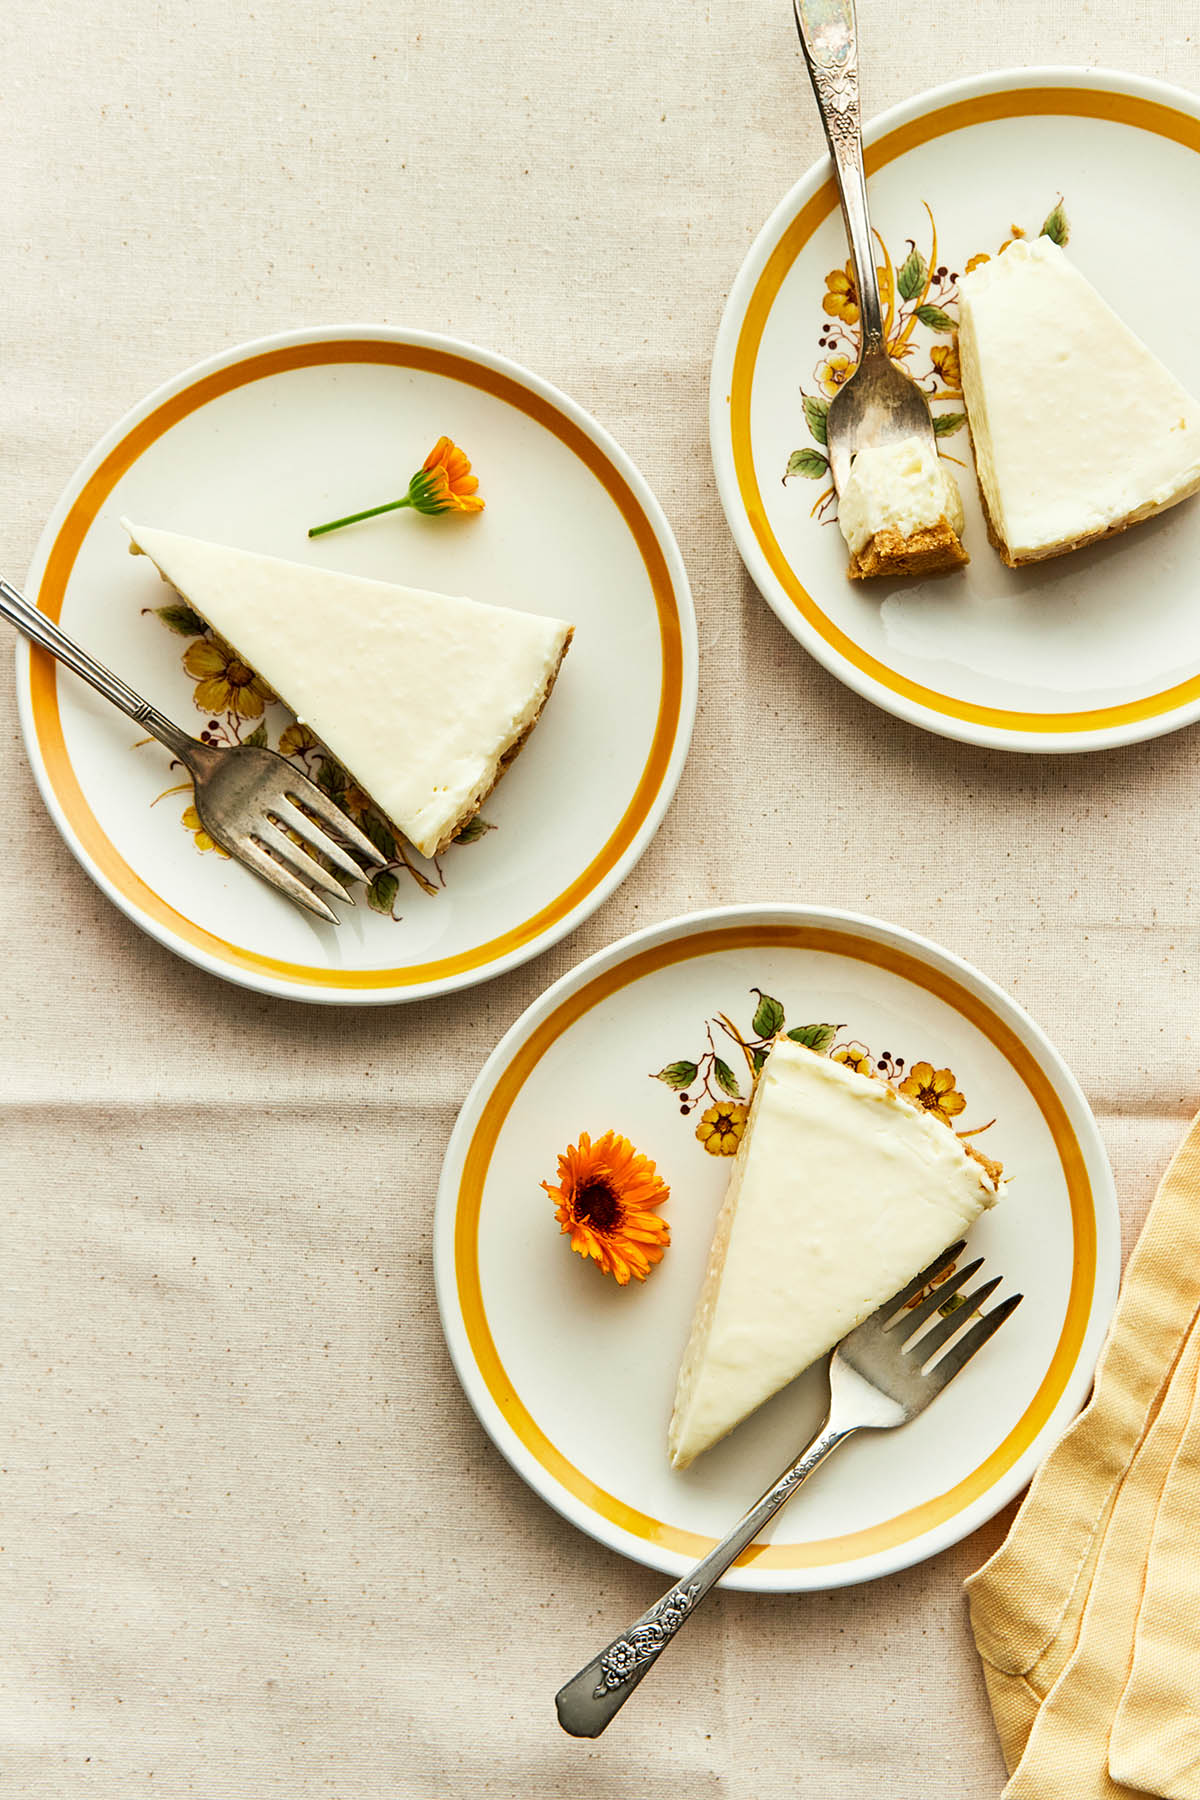 Three slices of gluten-free no-bake cheesecake on plates.